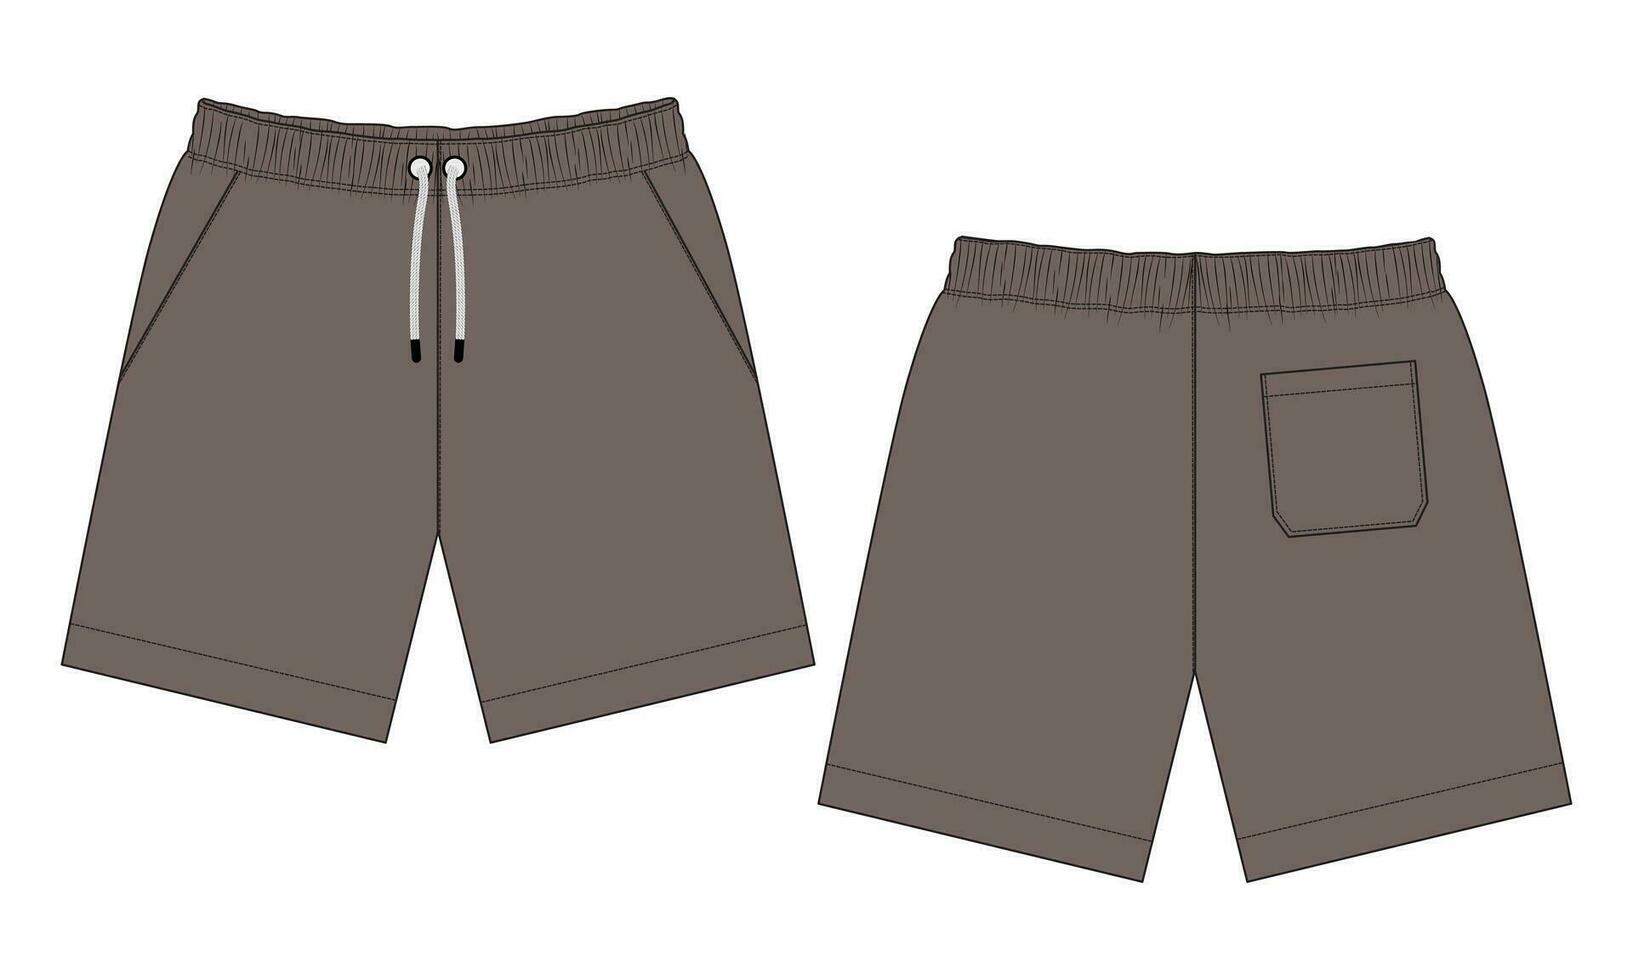 Shorts pants vector illustration template front and back views